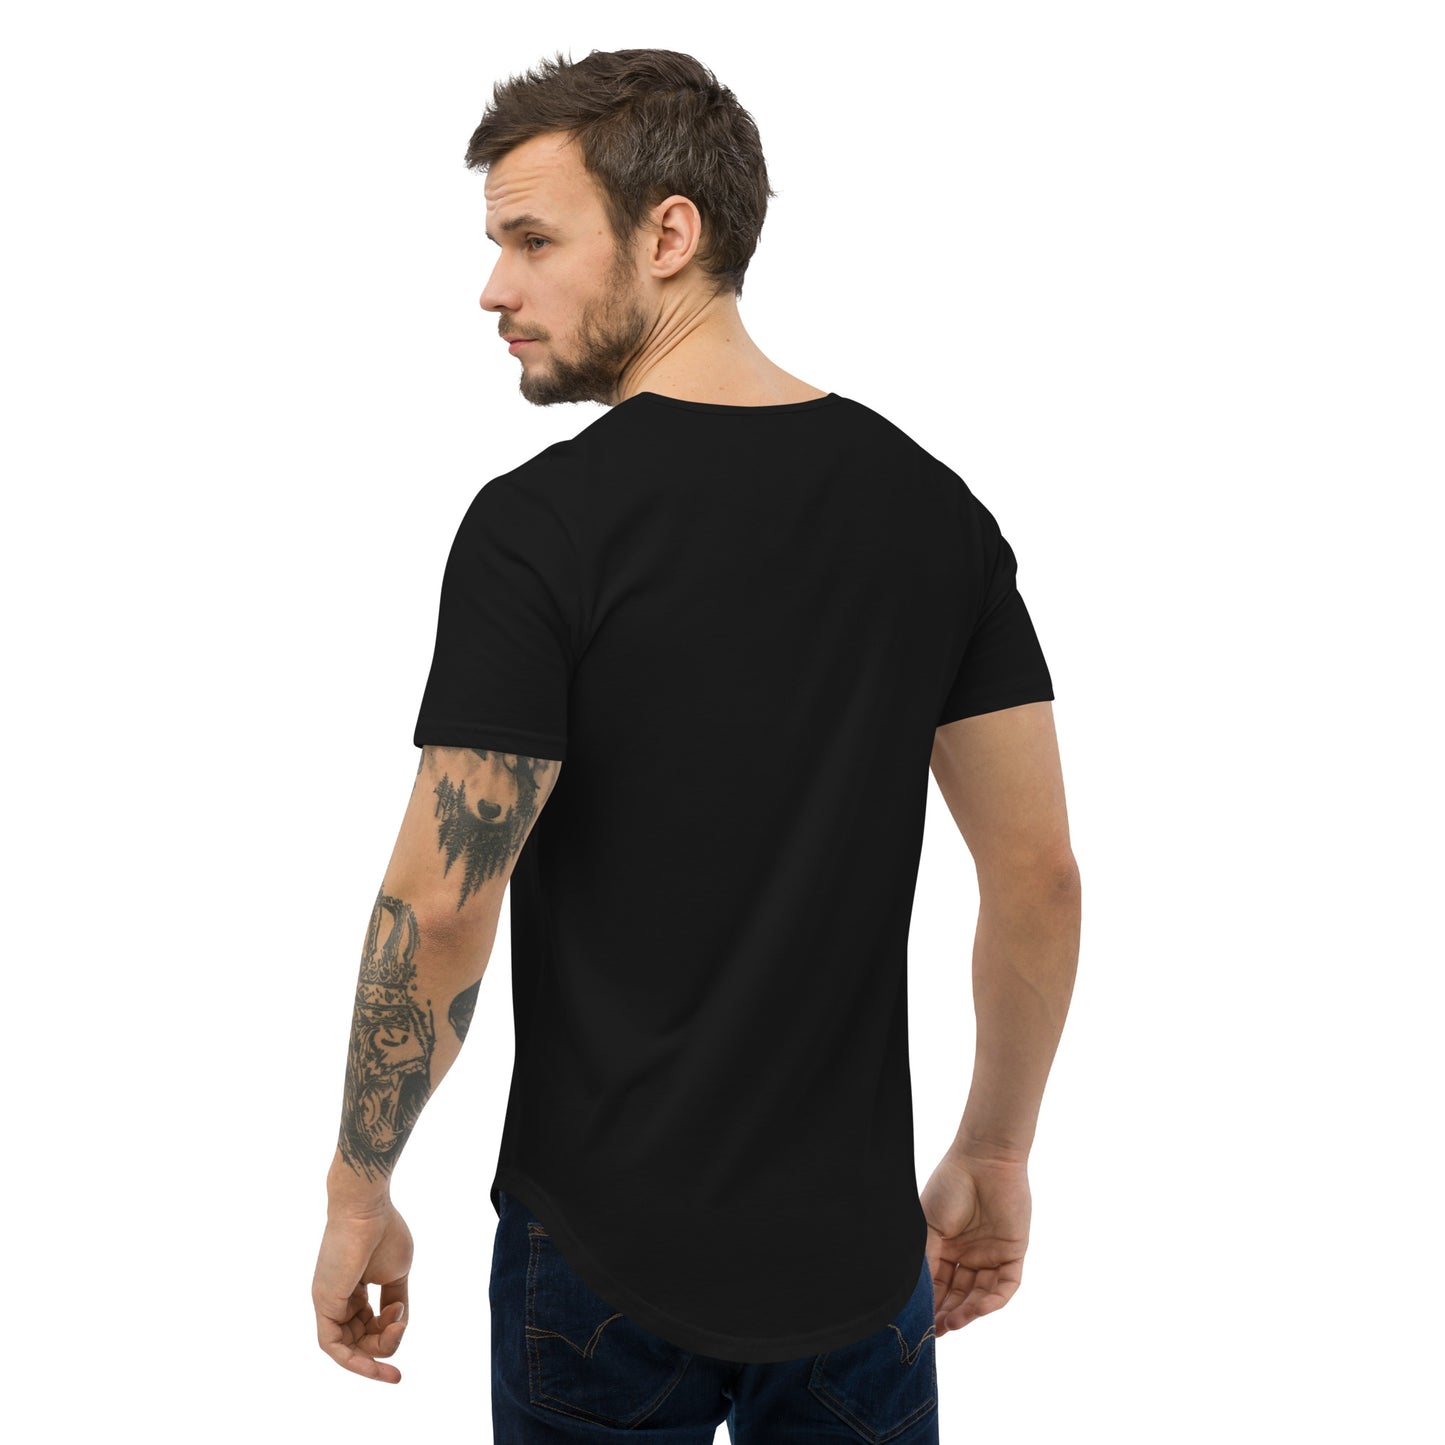 GREATLIFE / FOCUS FORWARD Men's Curved Hem T-Shirt